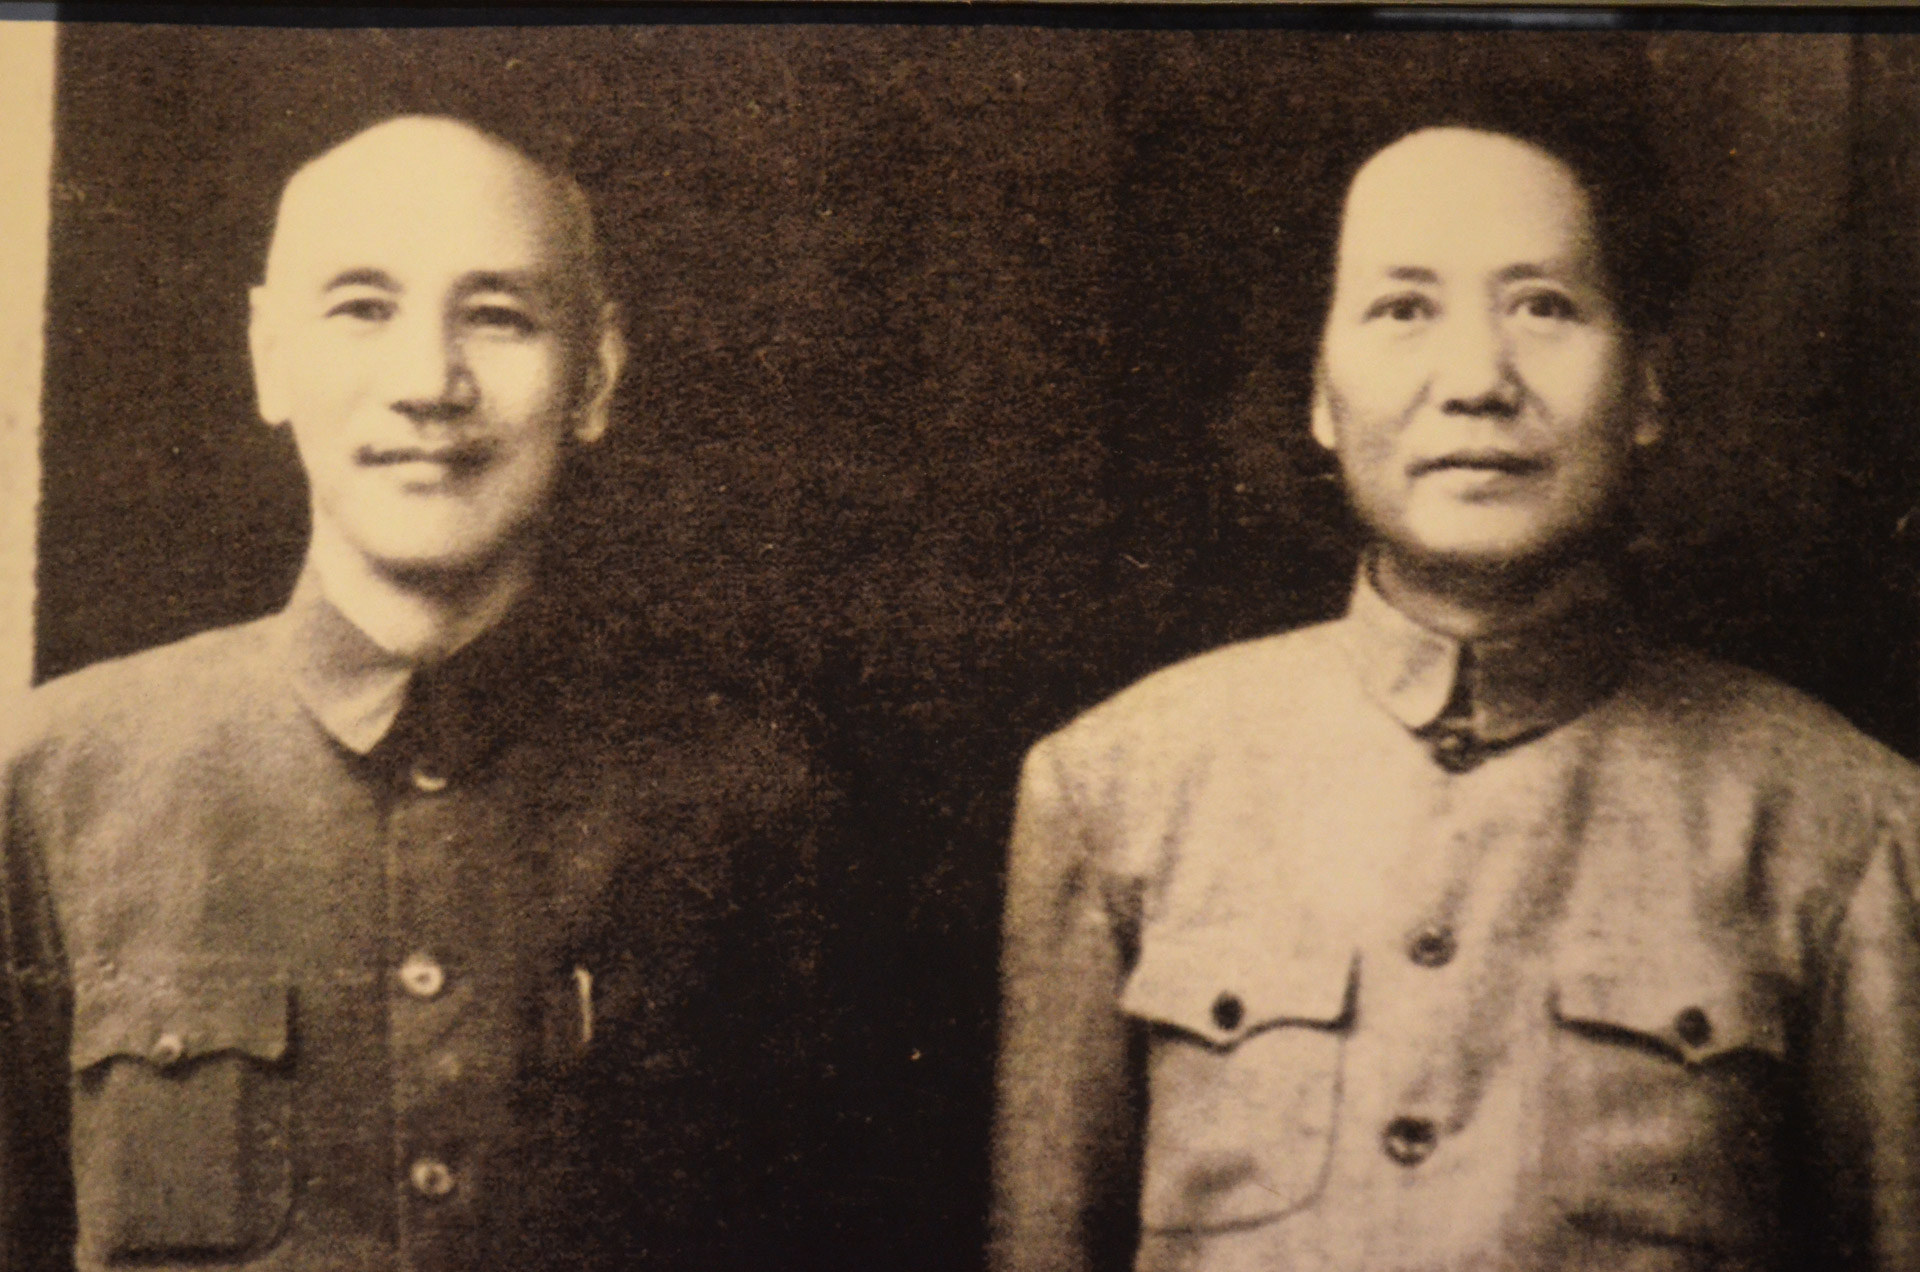 Mao Chiang Image Public Domain